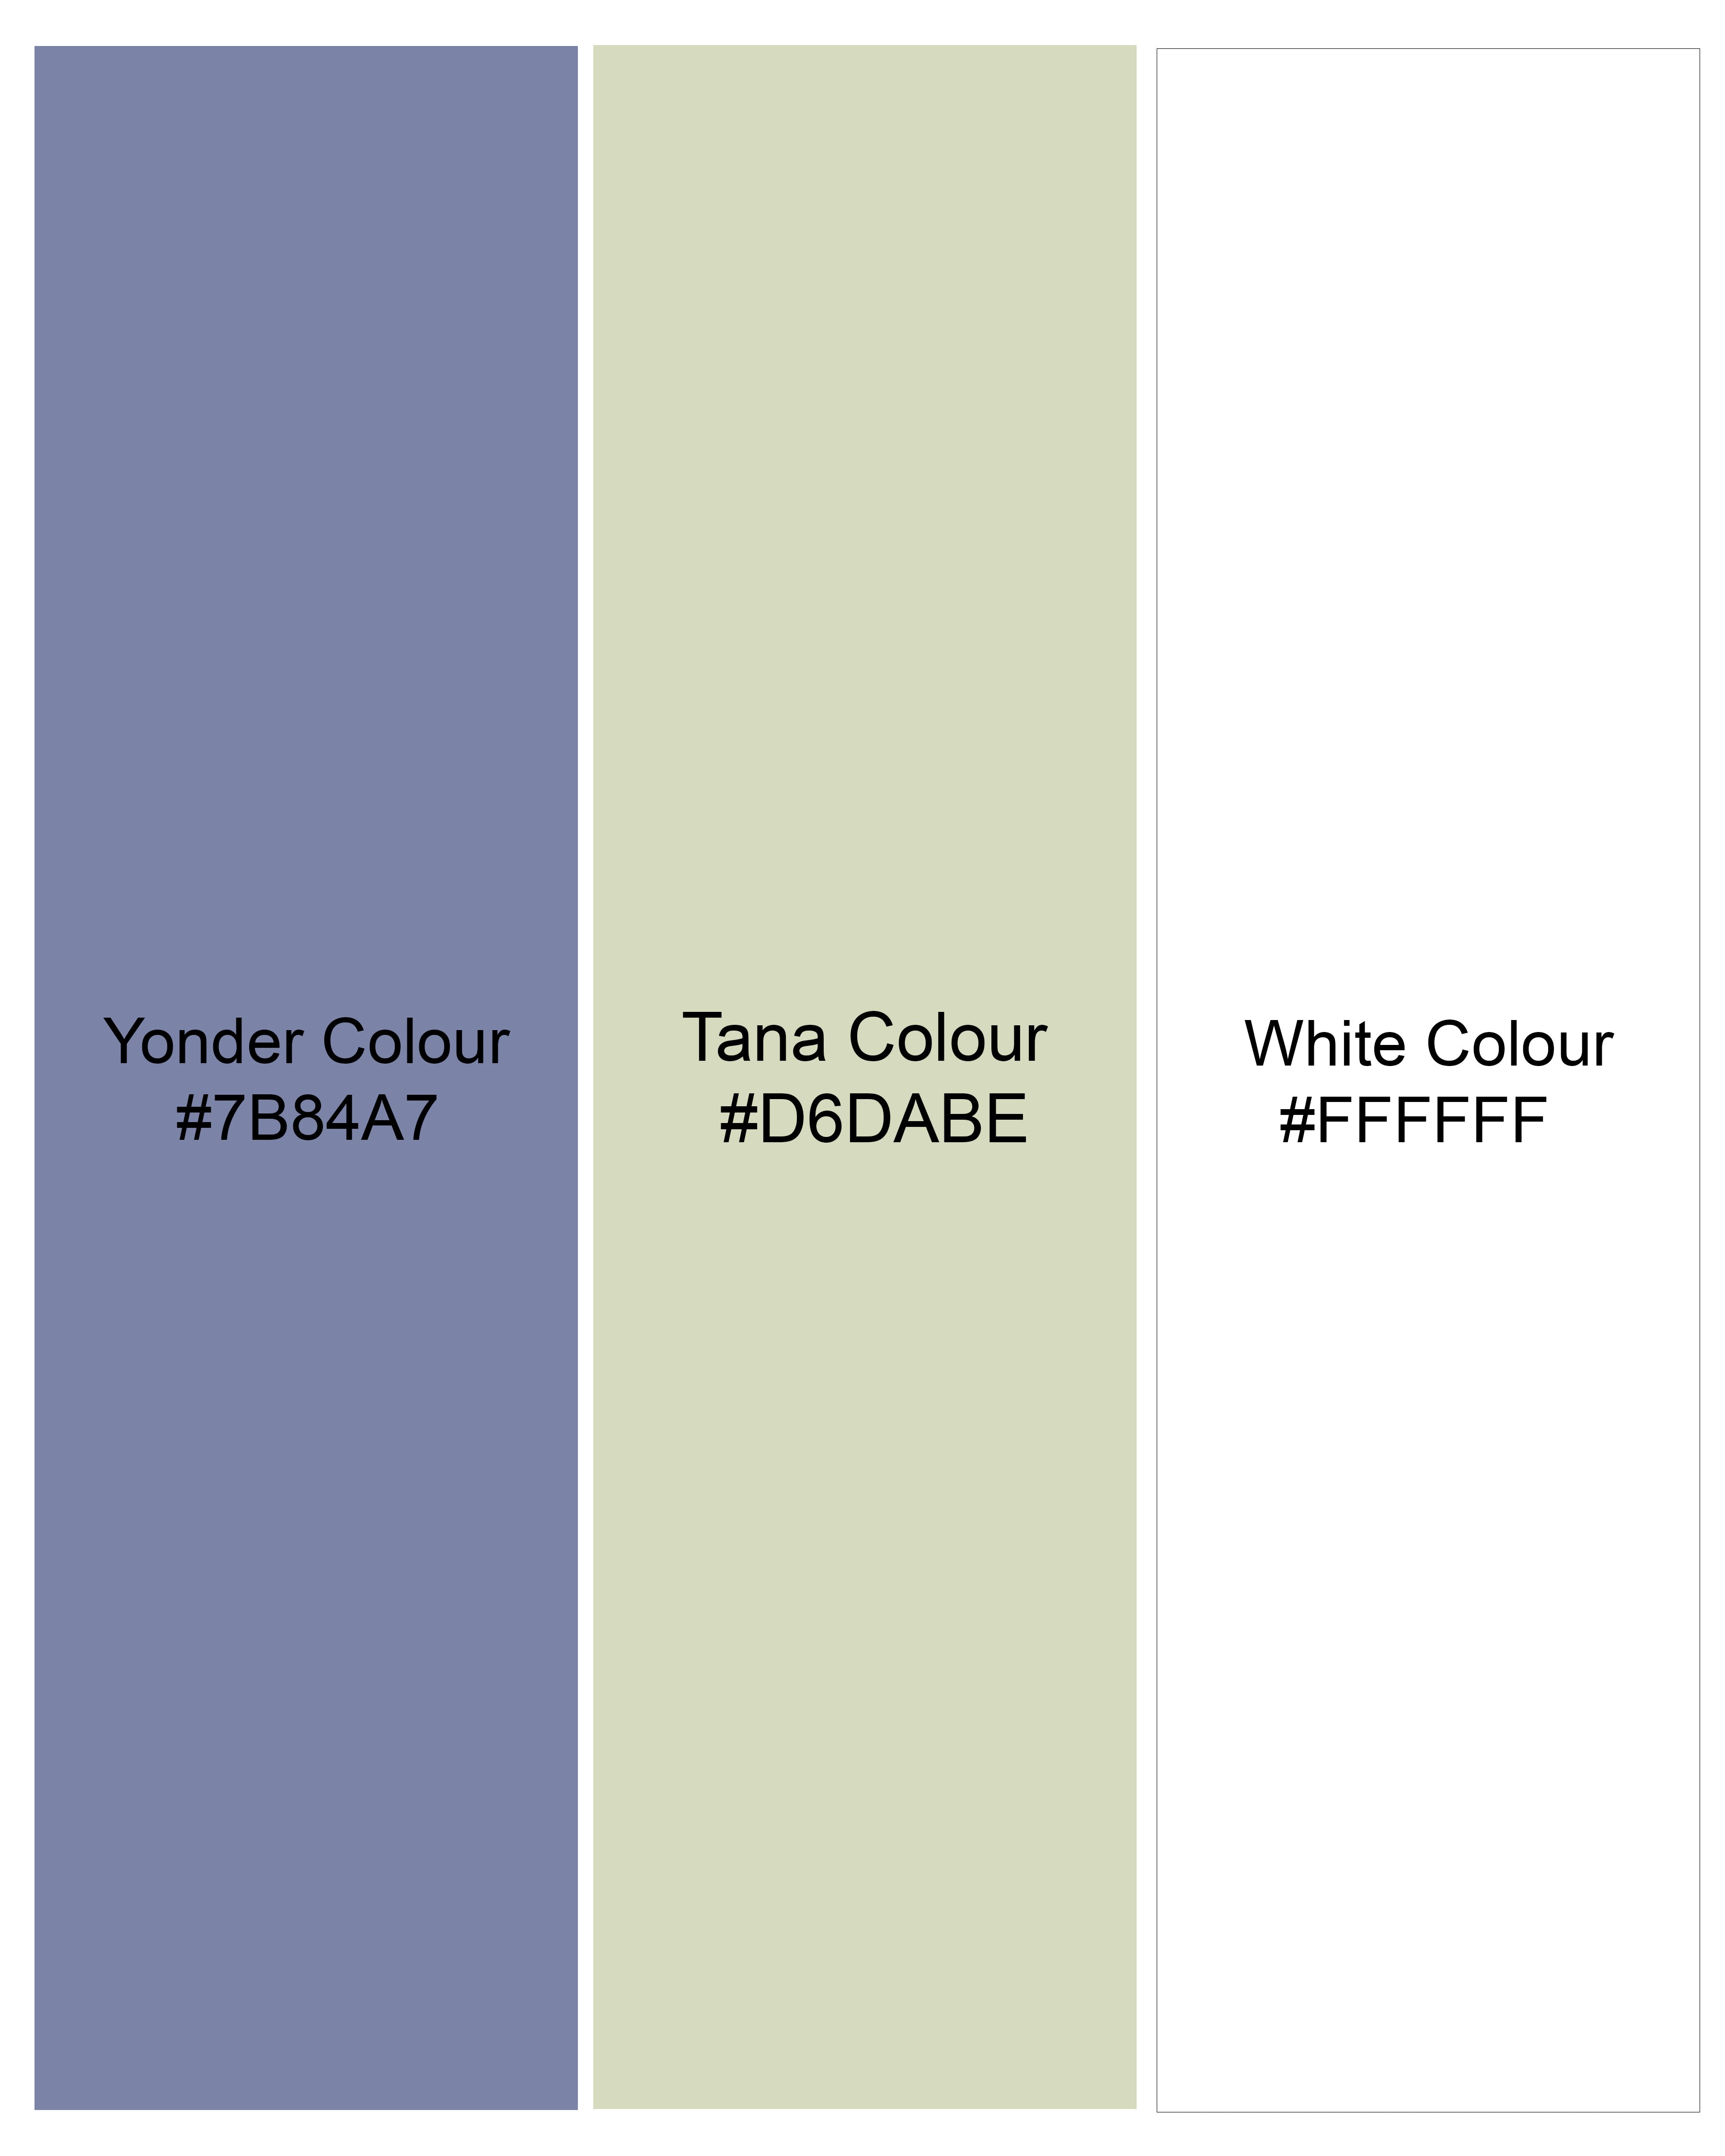 Yonder Blue and Tuna Green Printed Super Soft Premium Cotton Shirt 9978-38, 9978-H-38, 9978-39, 9978-H-39, 9978-40, 9978-H-40, 9978-42, 9978-H-42, 9978-44, 9978-H-44, 9978-46, 9978-H-46, 9978-48, 9978-H-48, 9978-50, 9978-H-50, 9978-52, 9978-H-52